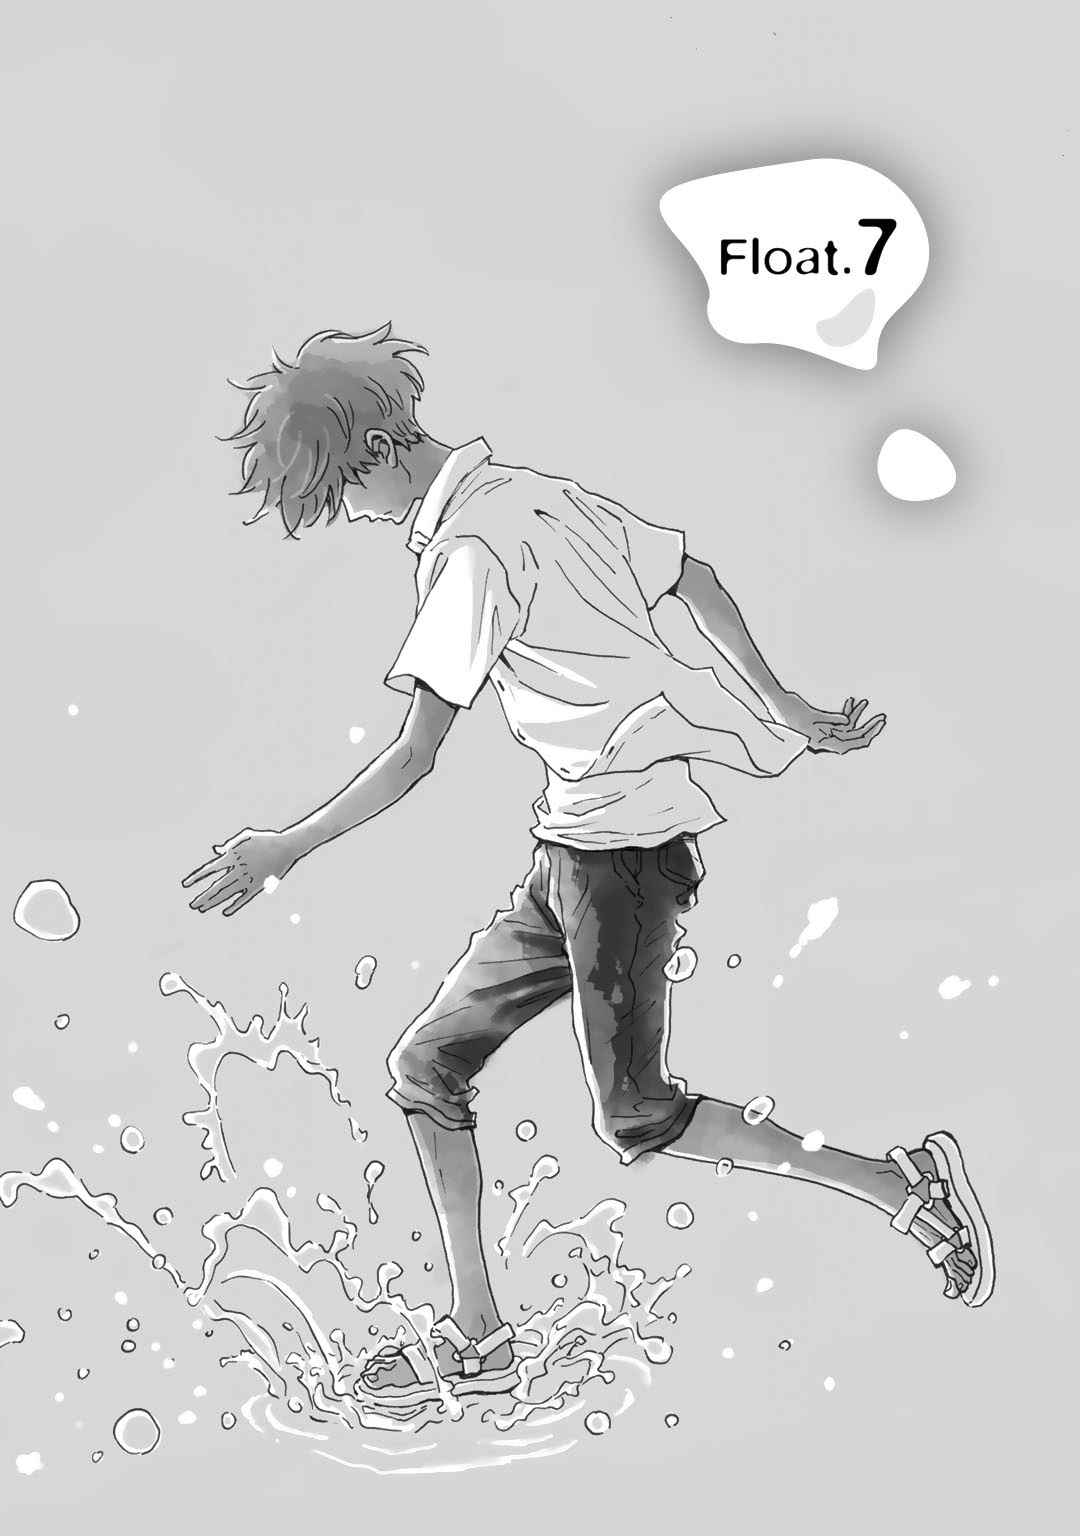 Ai to Ao no Kyoukai Vol. 2 Ch. 7 Float. 7